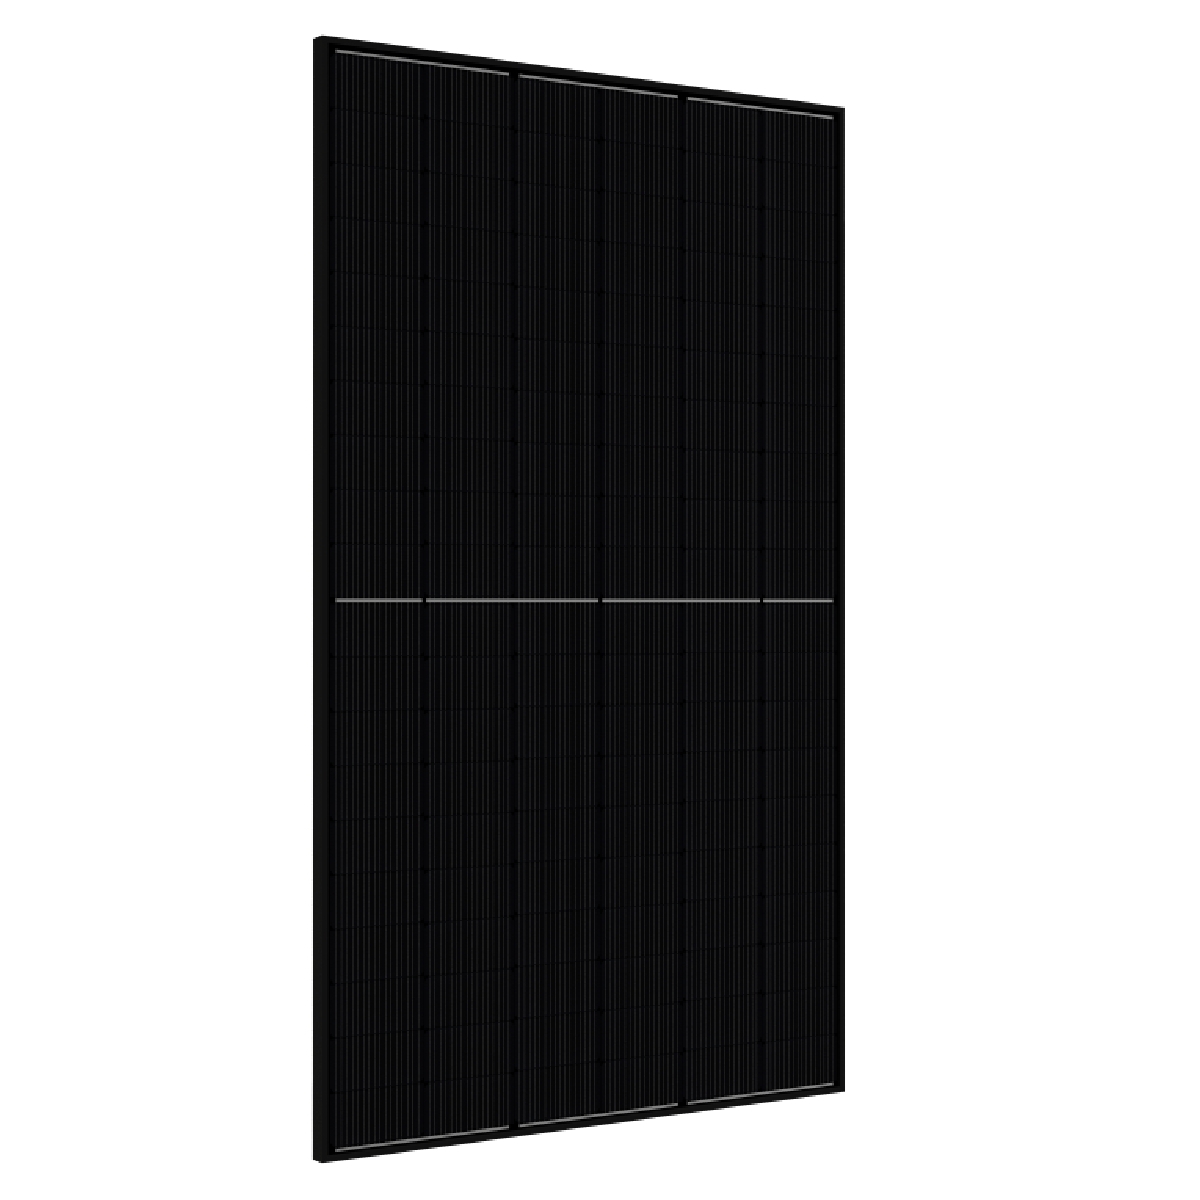 TommaTech 465Wp 120TNFB M10 TopCon Dark Series Solar Panel